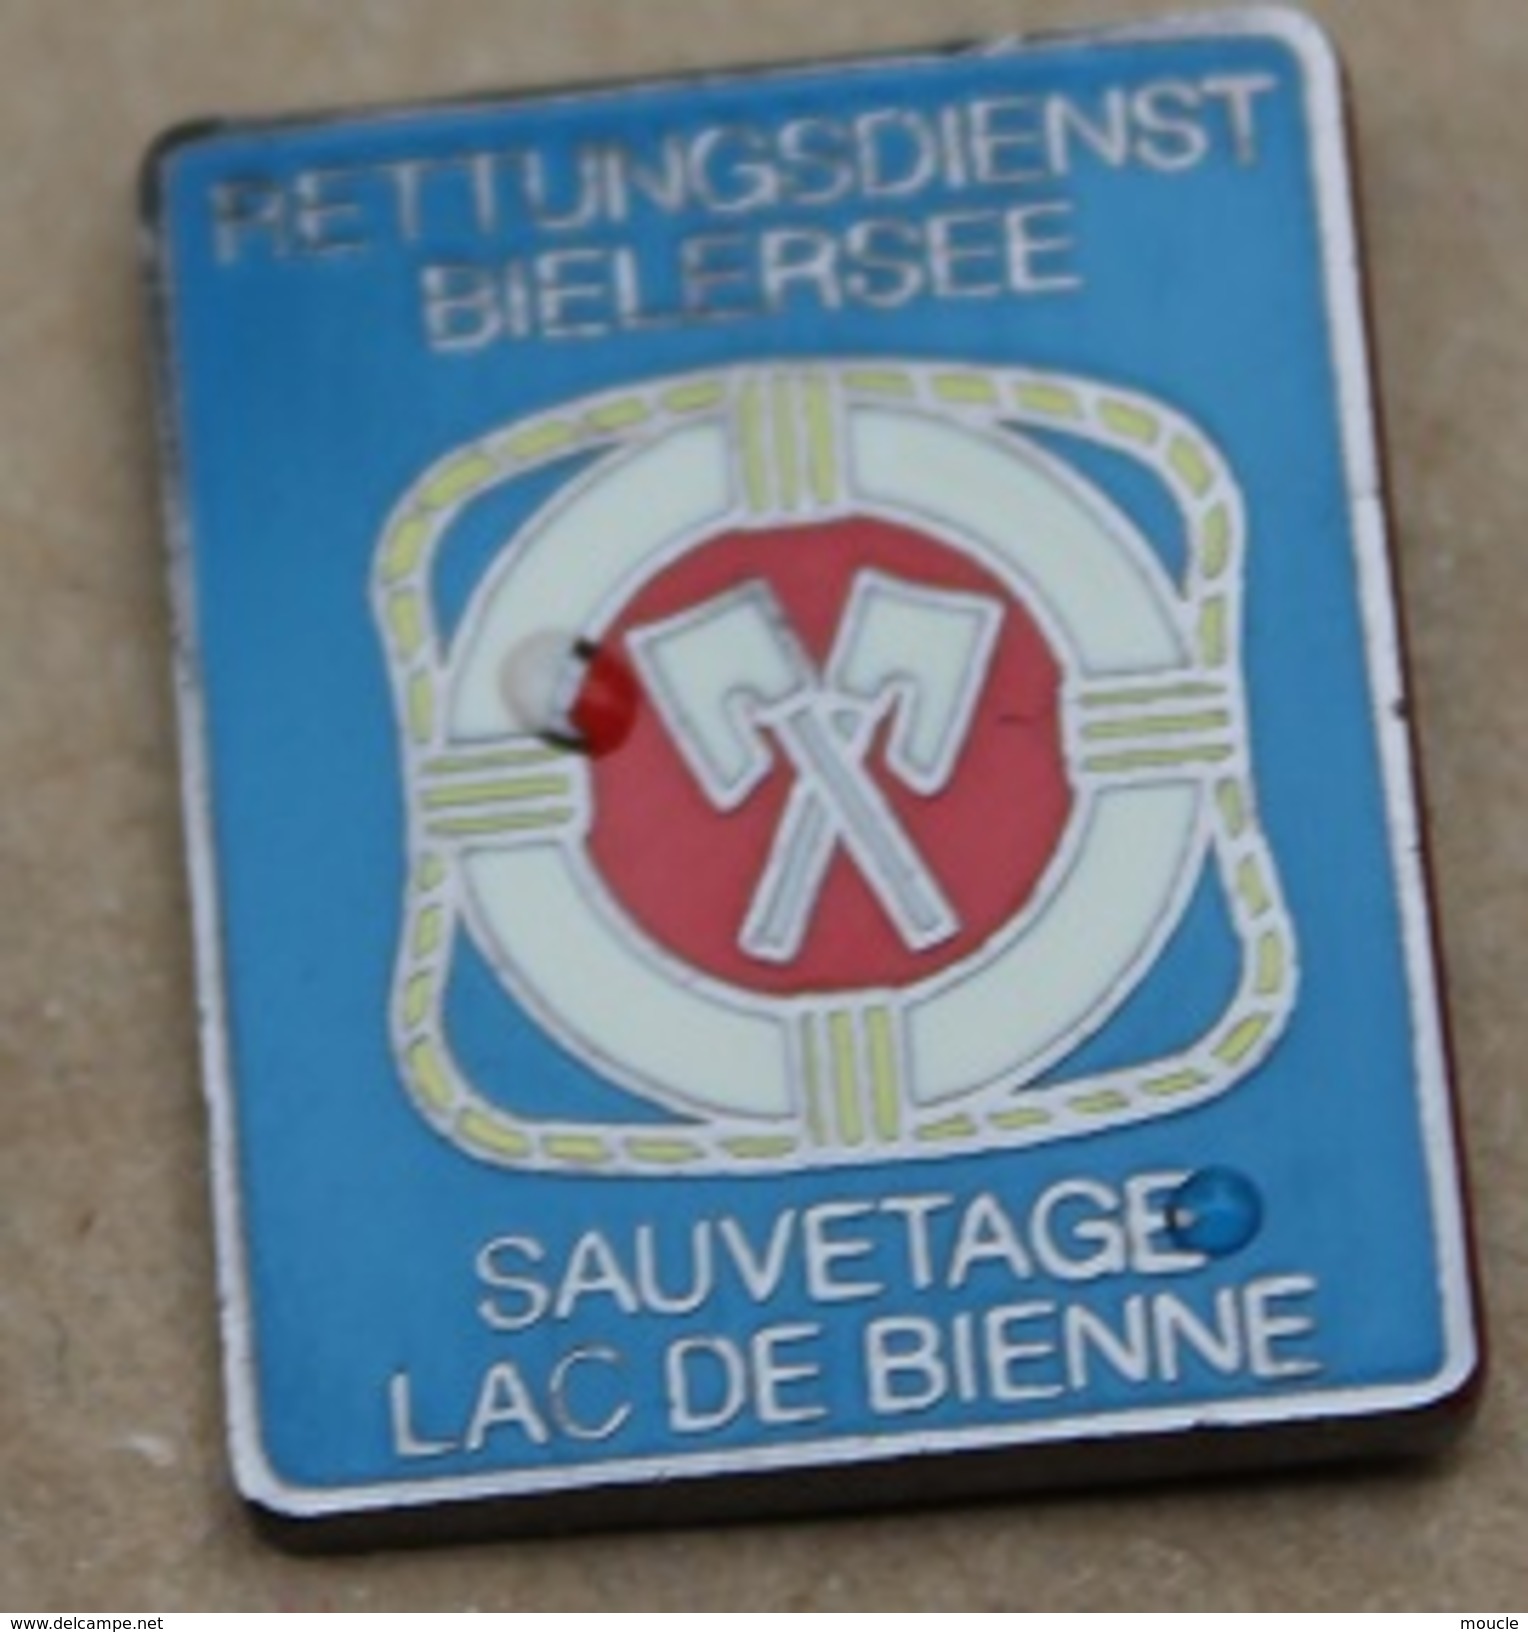 SAUVETAGE LA DE BIENNE - RETTUNGSDIENST BIELERSEE - BOUEE  - SWISS - SUISSE - SCHWEIZ   -   (19) - Médical